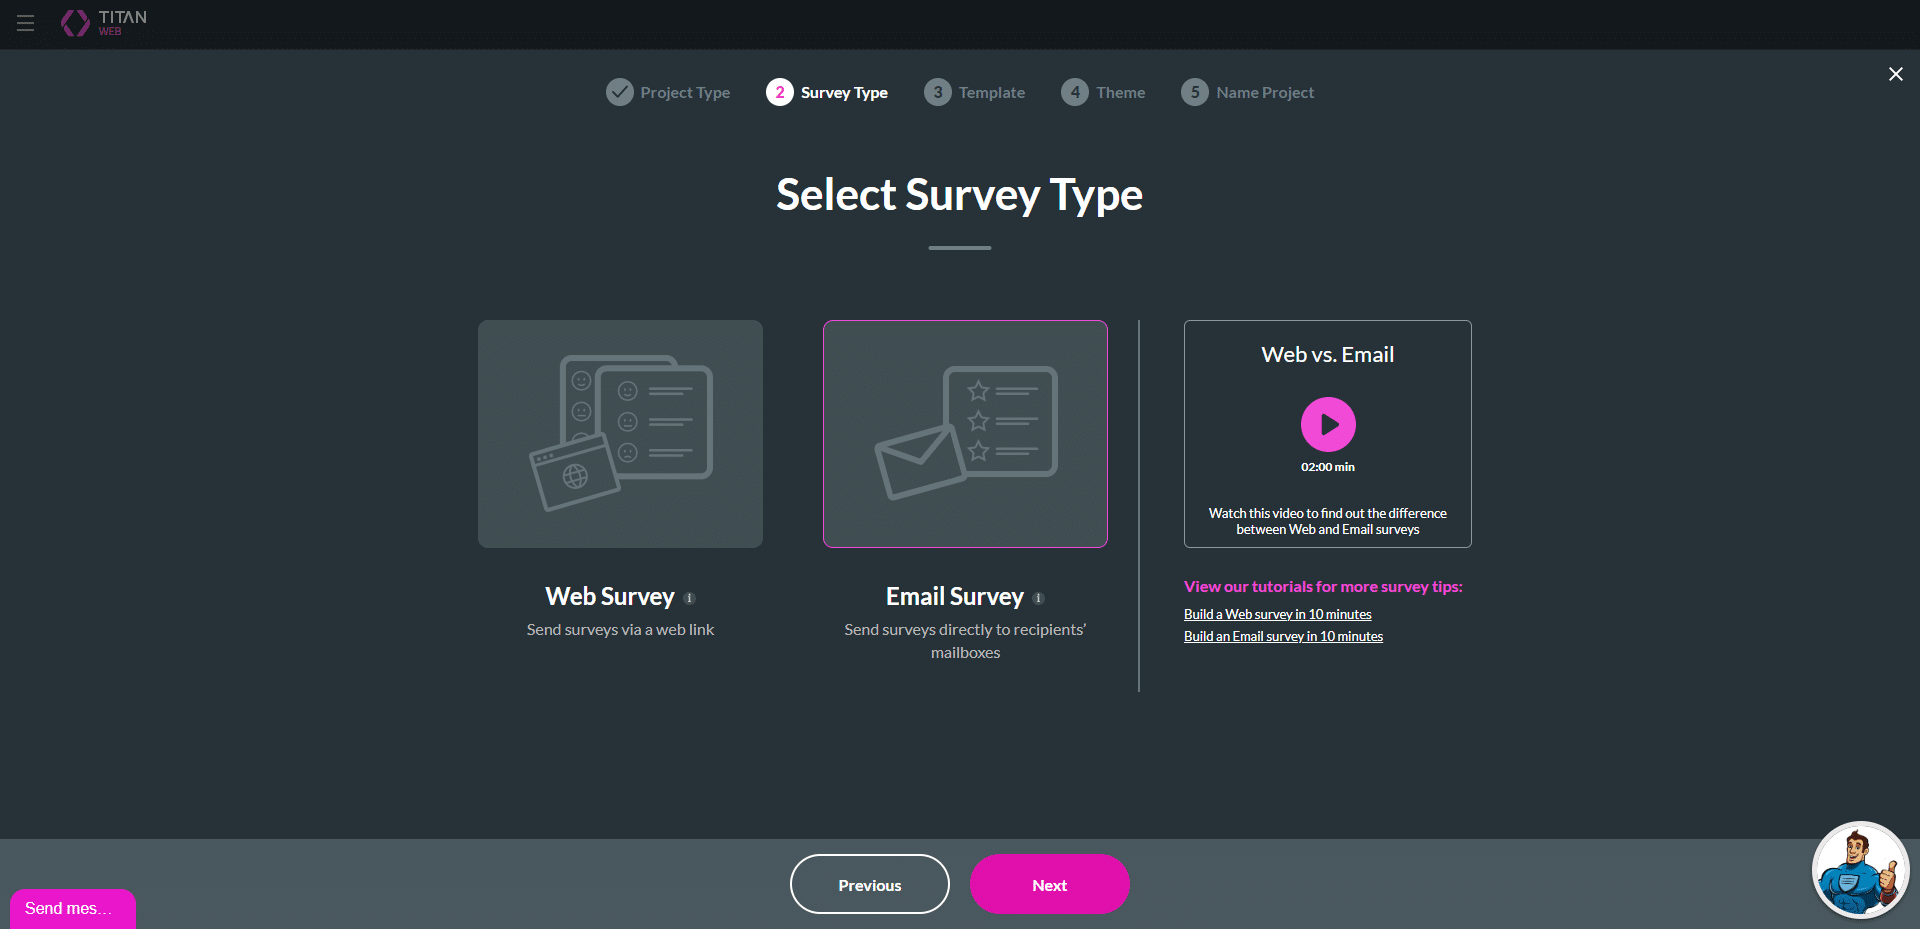 Email Survey option